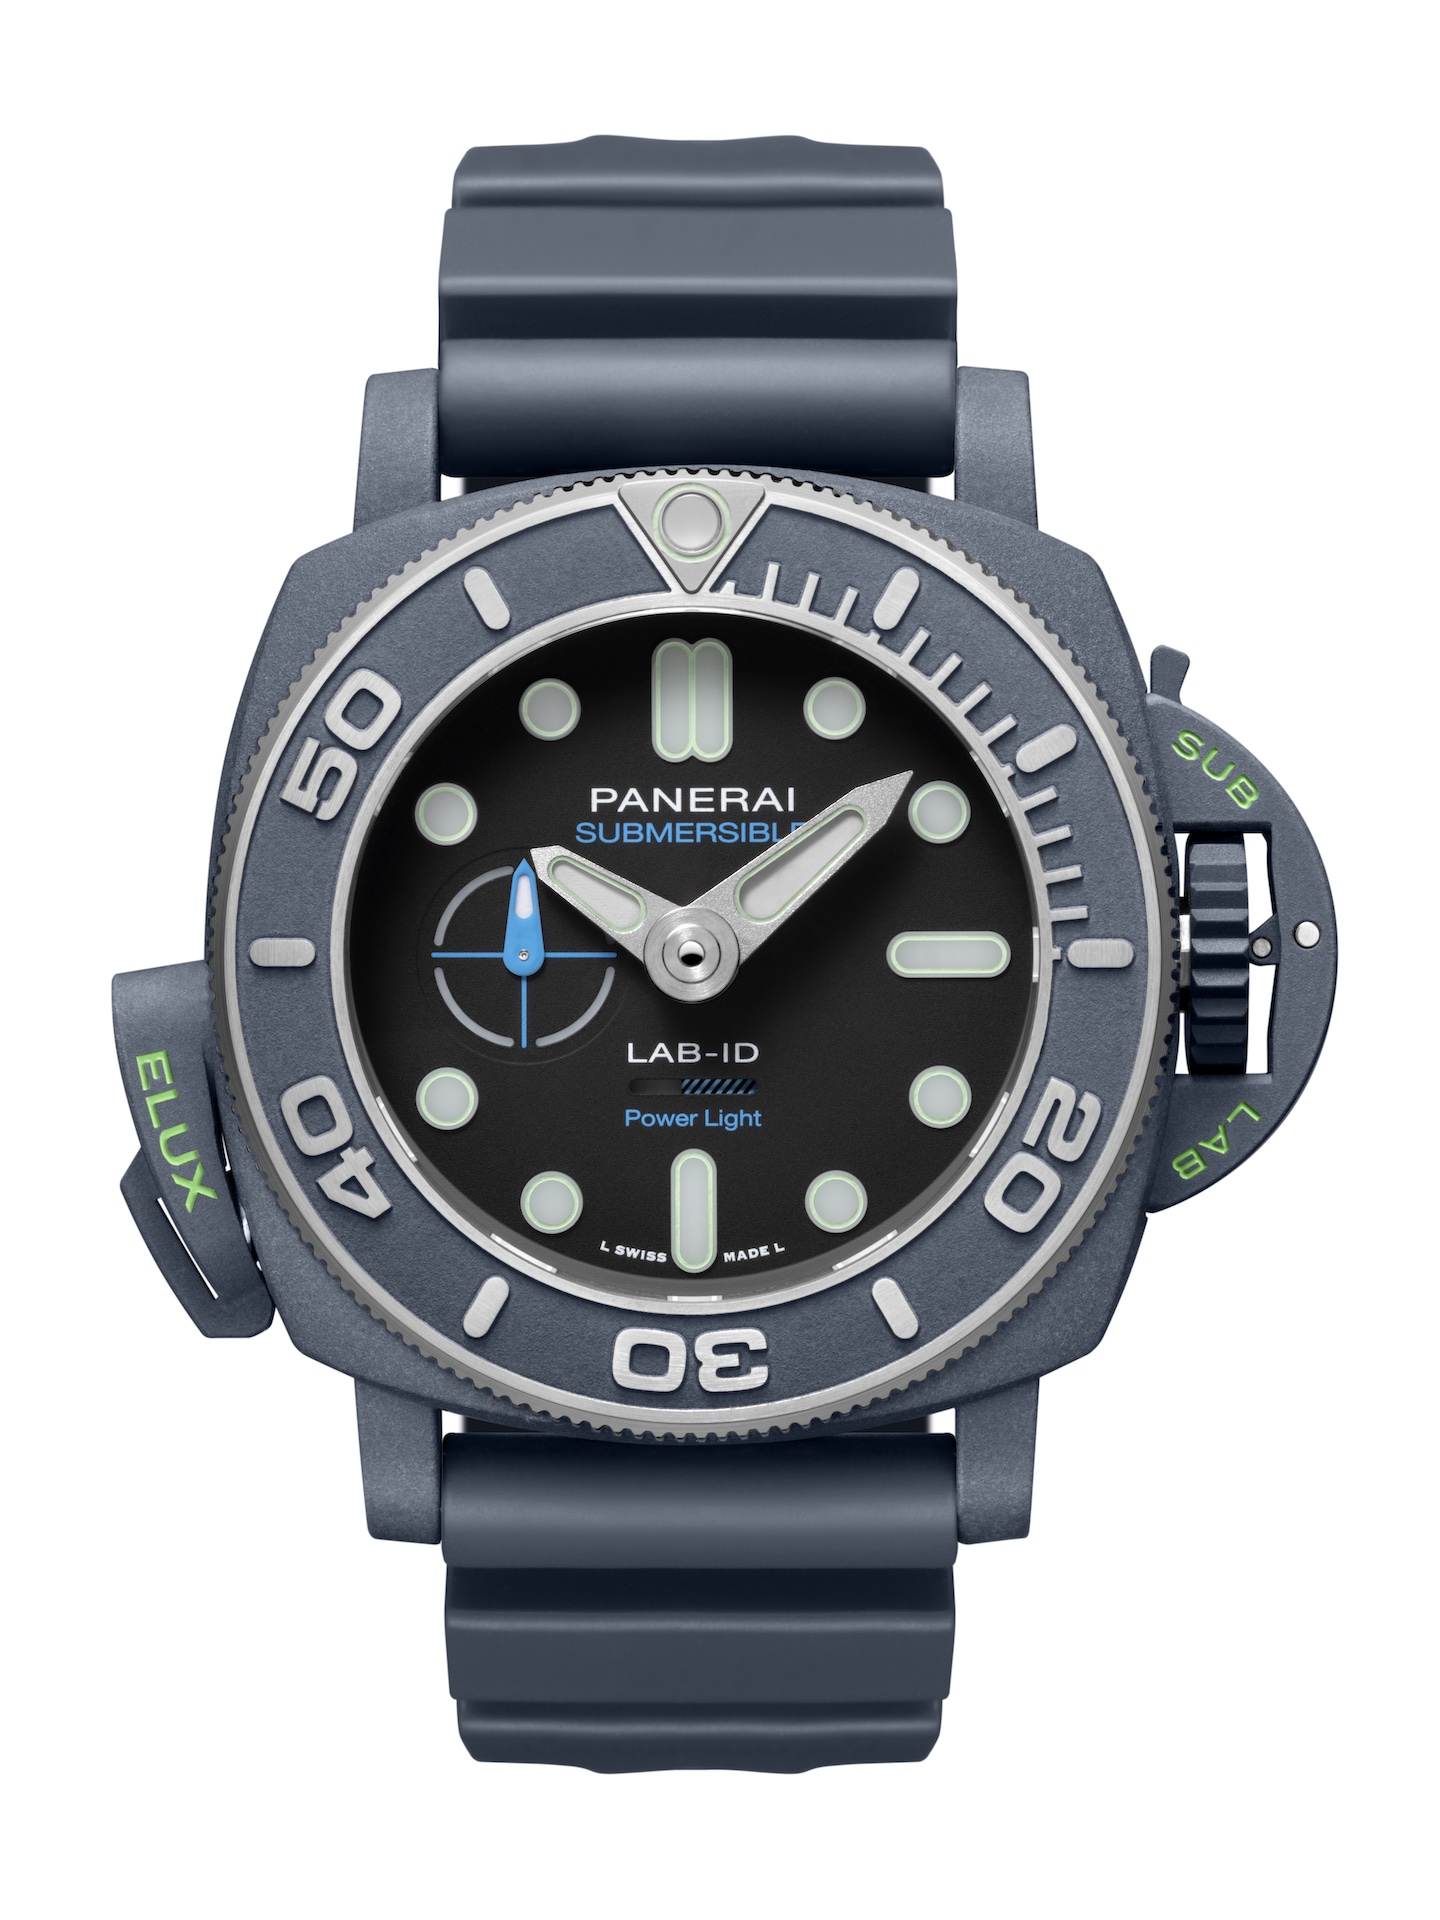 Panerai Submersible Elux LAB-ID watch 